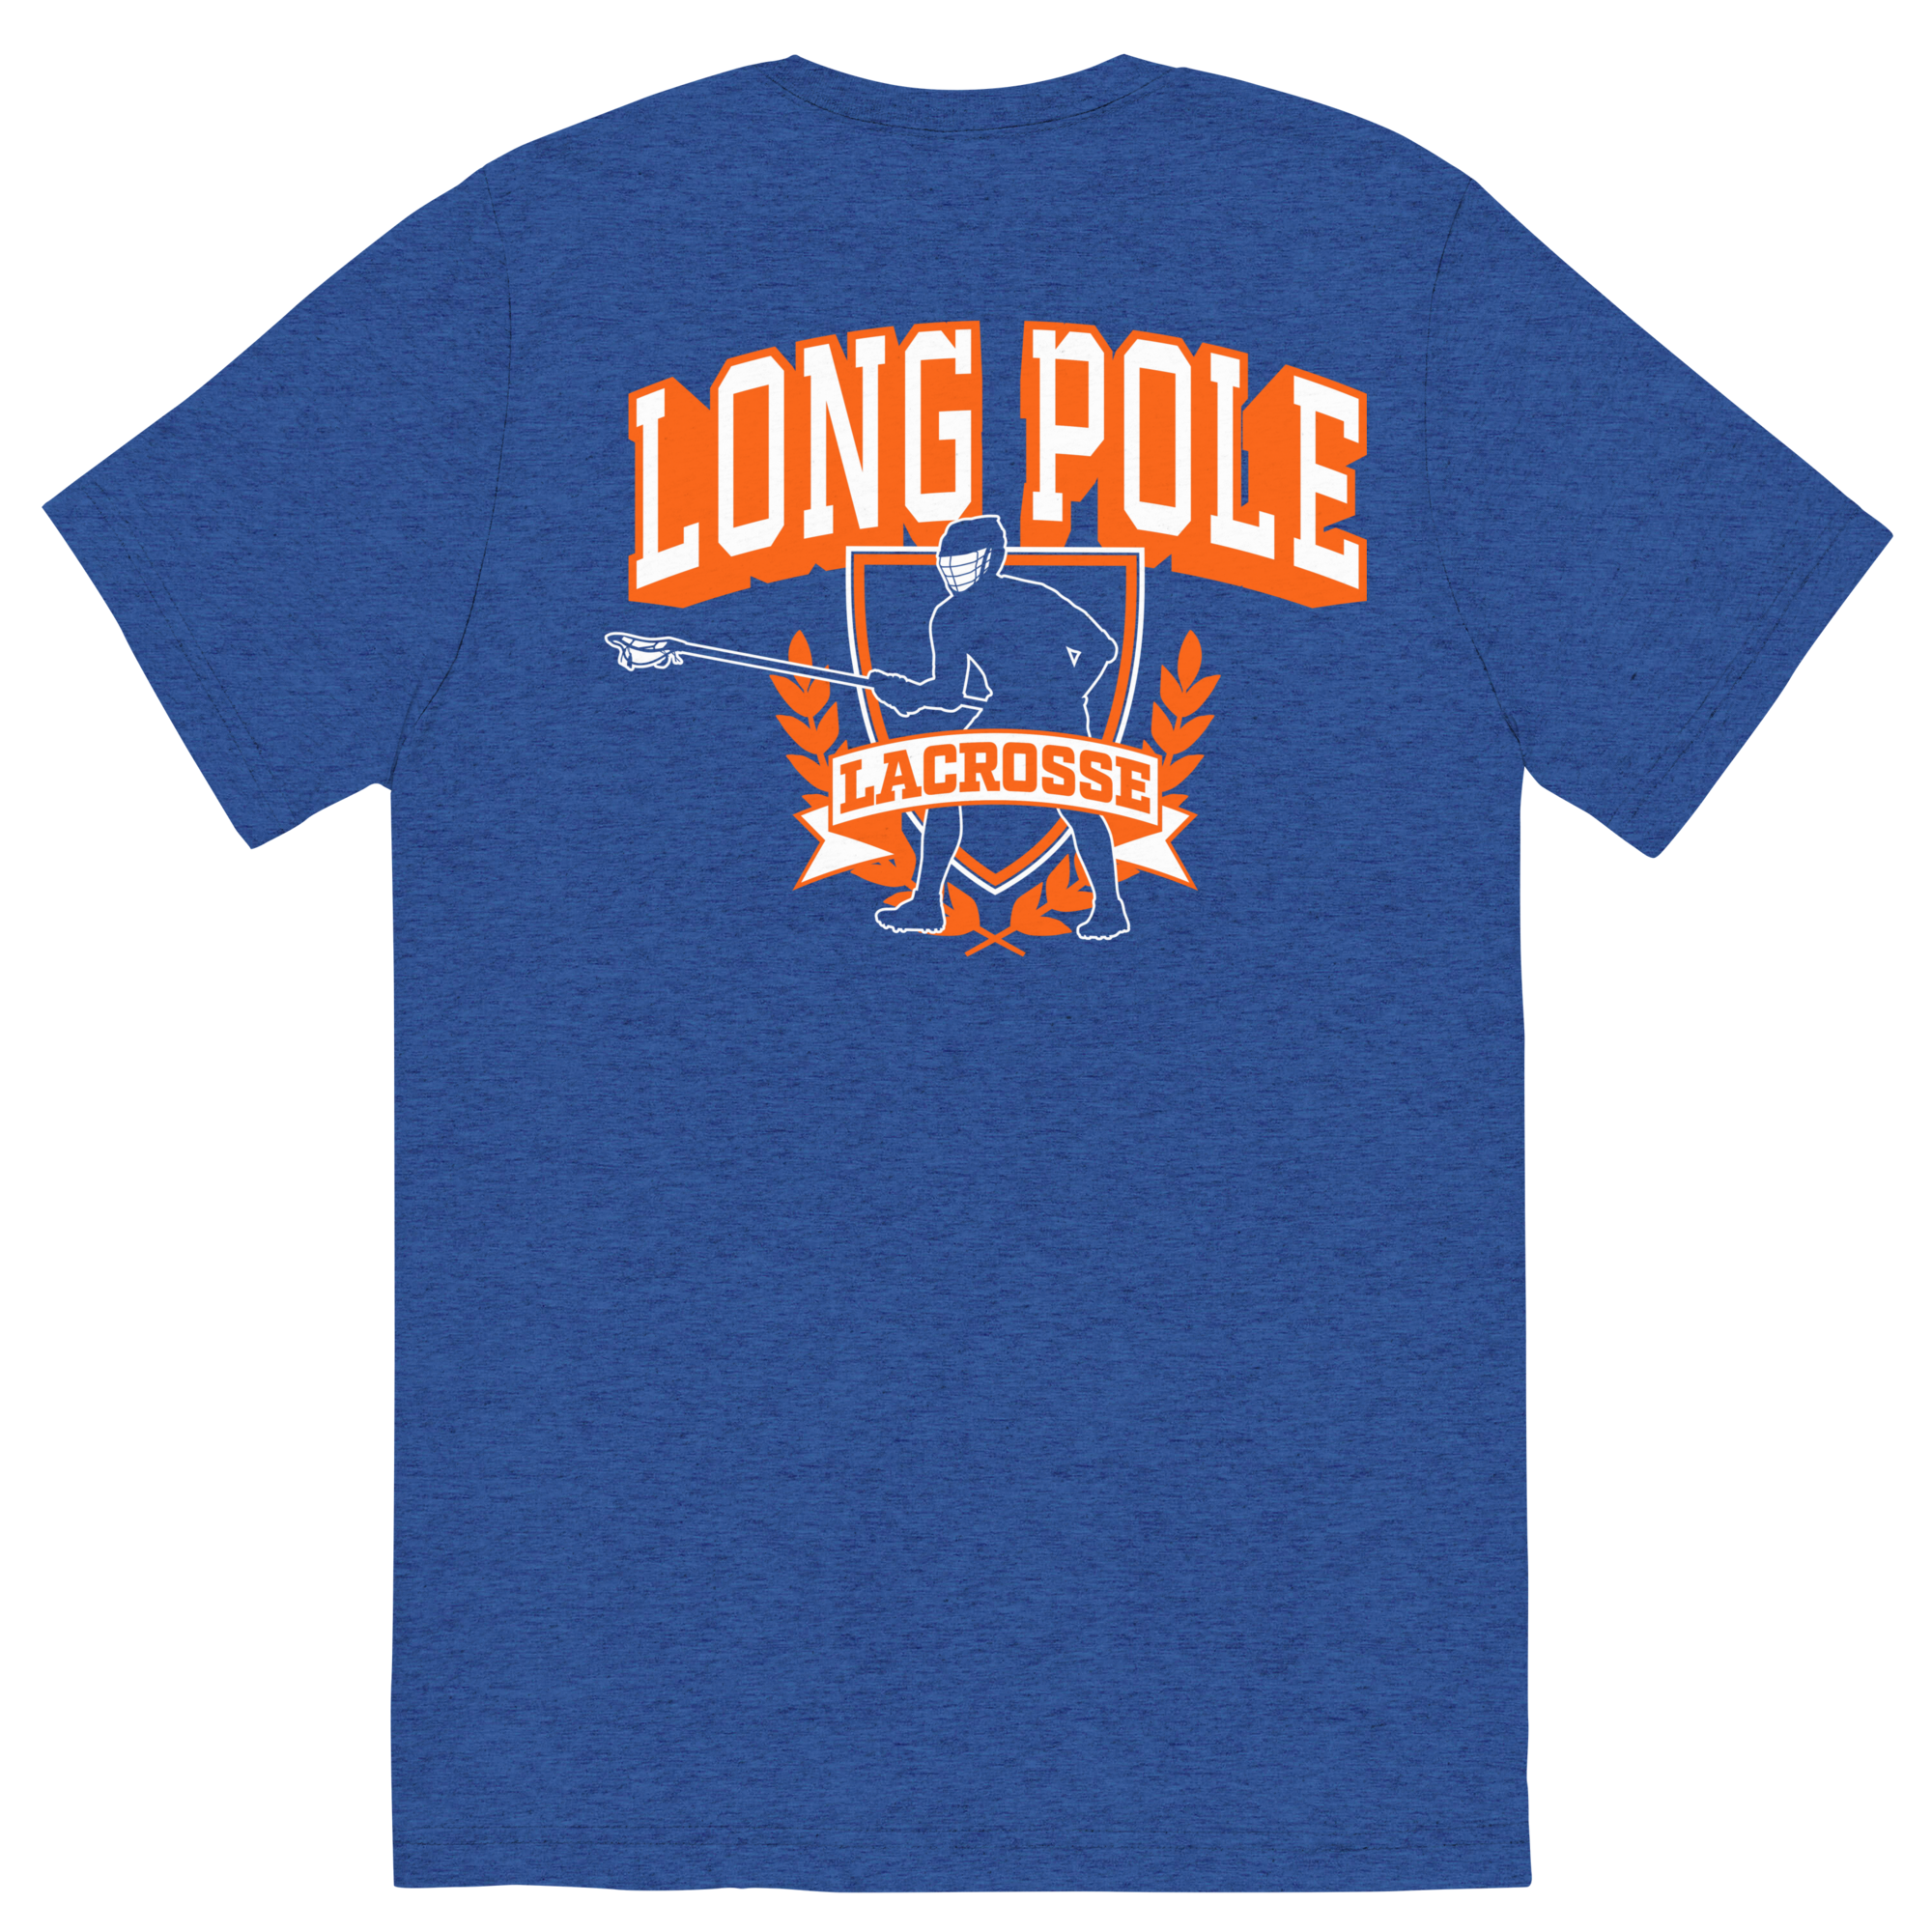 TLN Long Pole Lacrosse Blue T-Shirt